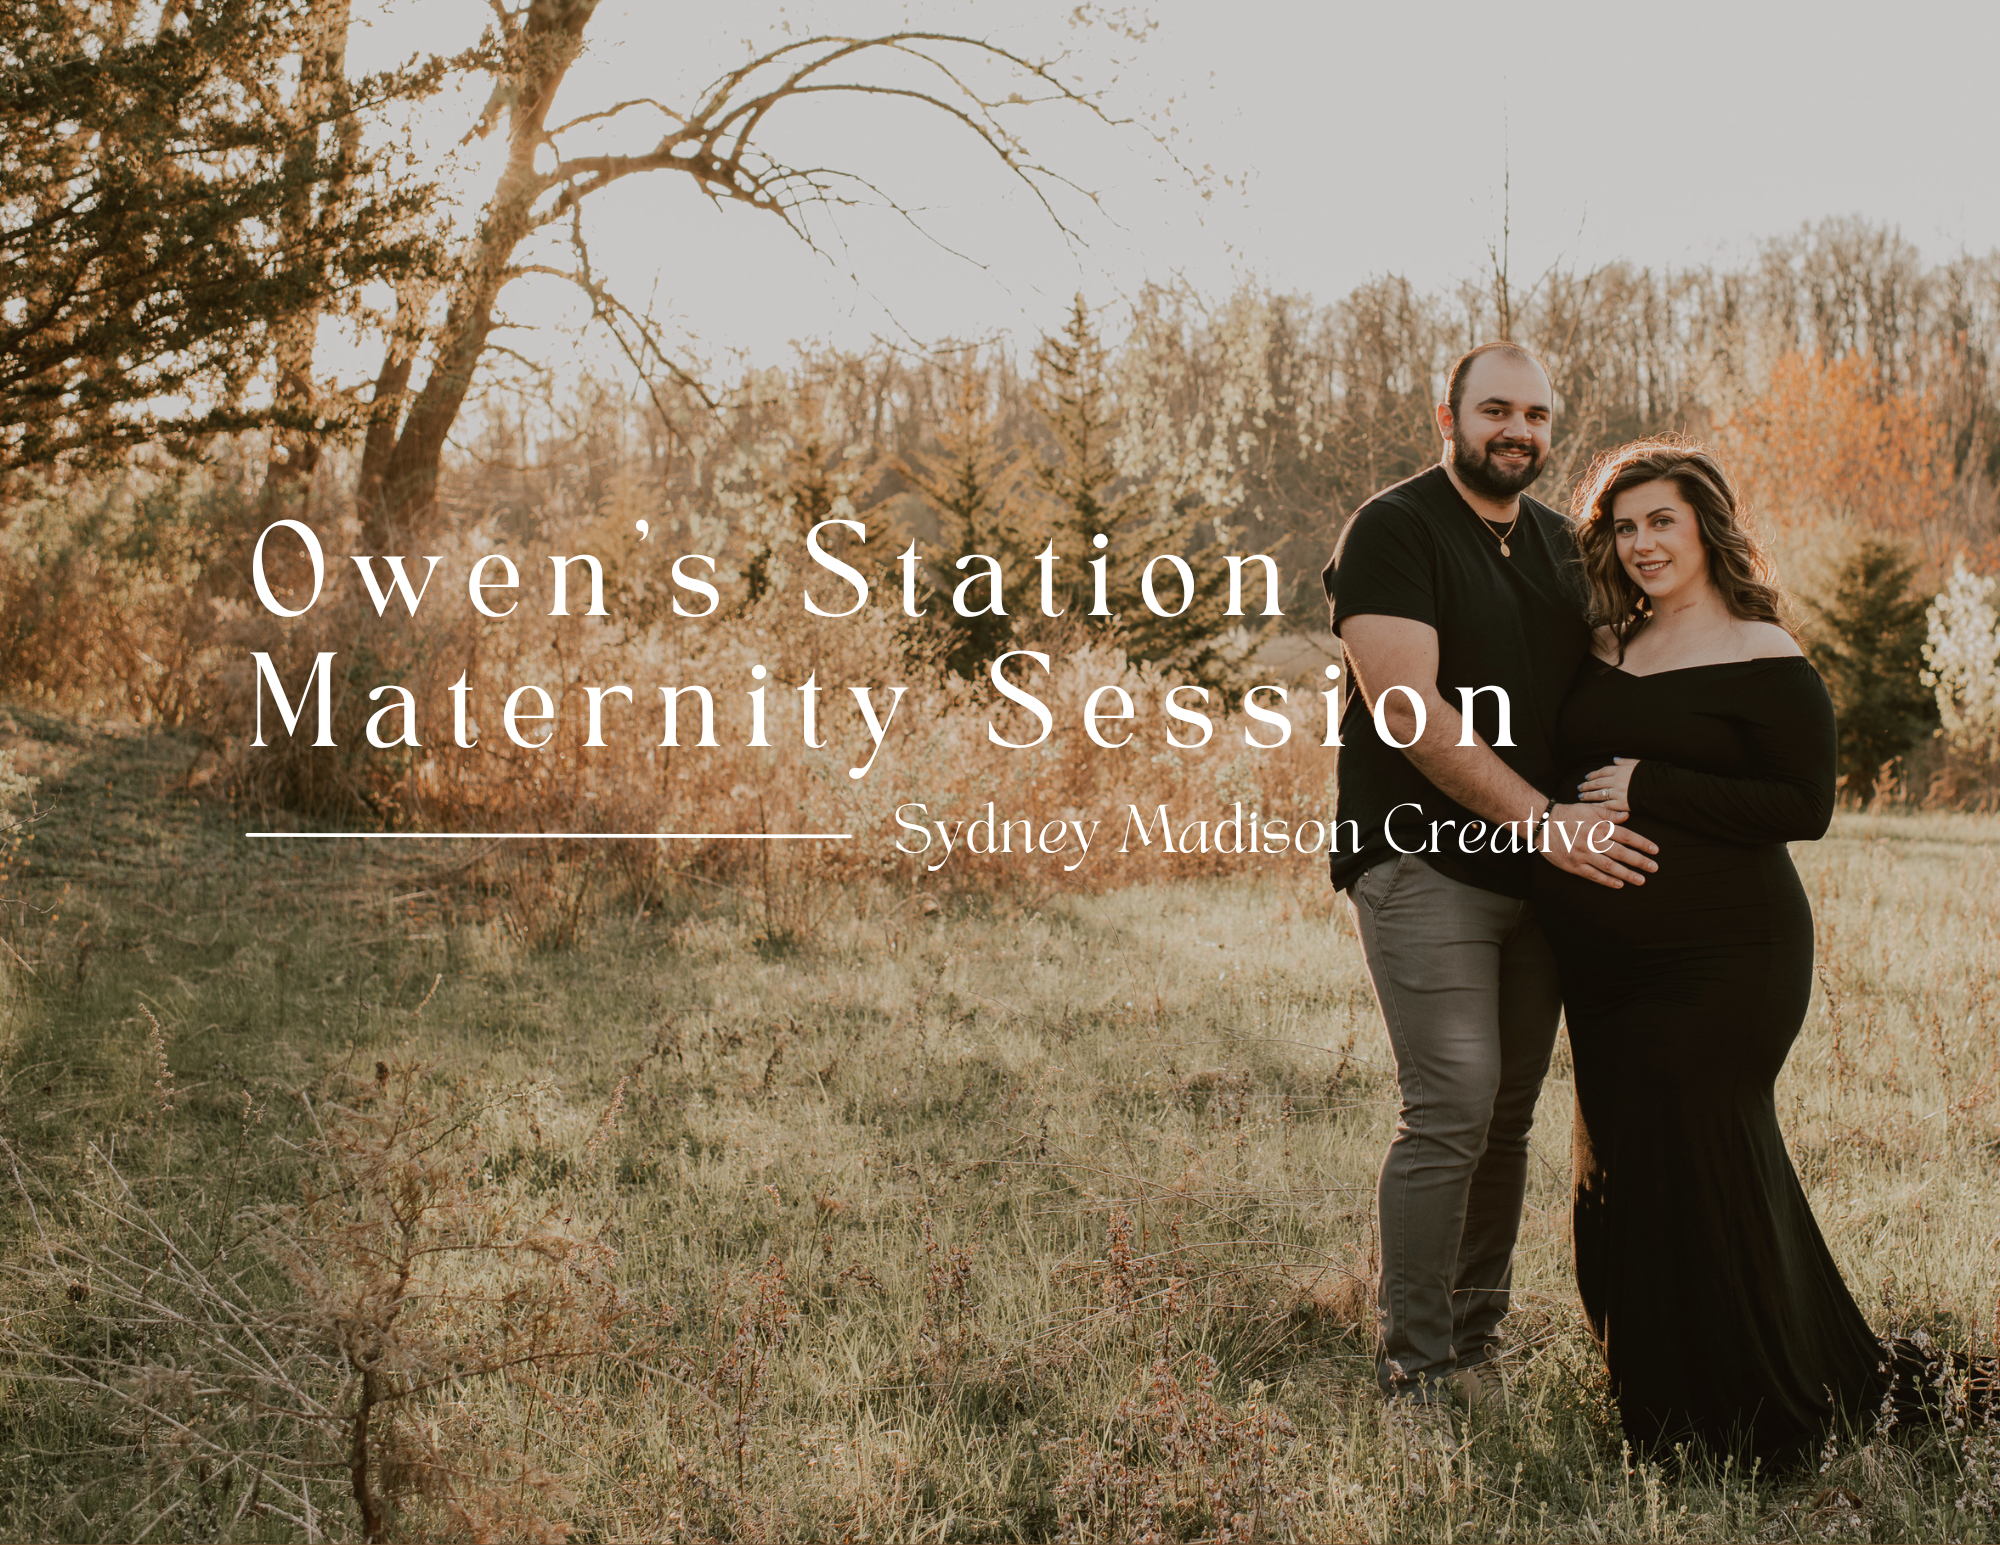 Sarah & Angelo Maternity Session at Owen's Station NJ by Sydney Madison Creative